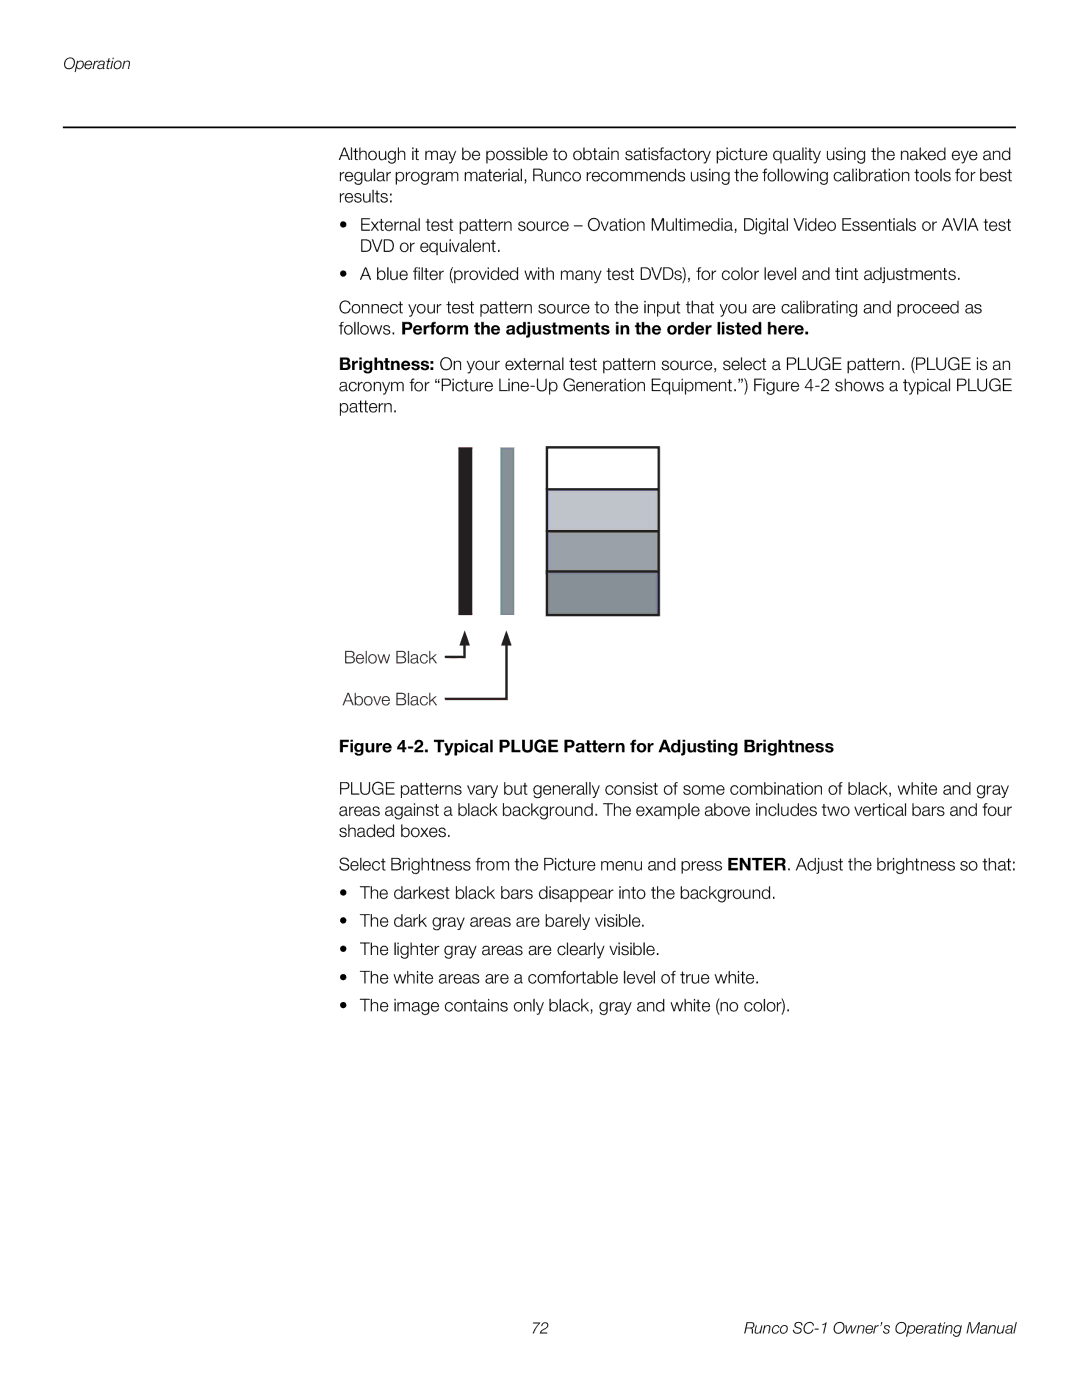 Runco SC-1 manual Typical Pluge Pattern for Adjusting Brightness 